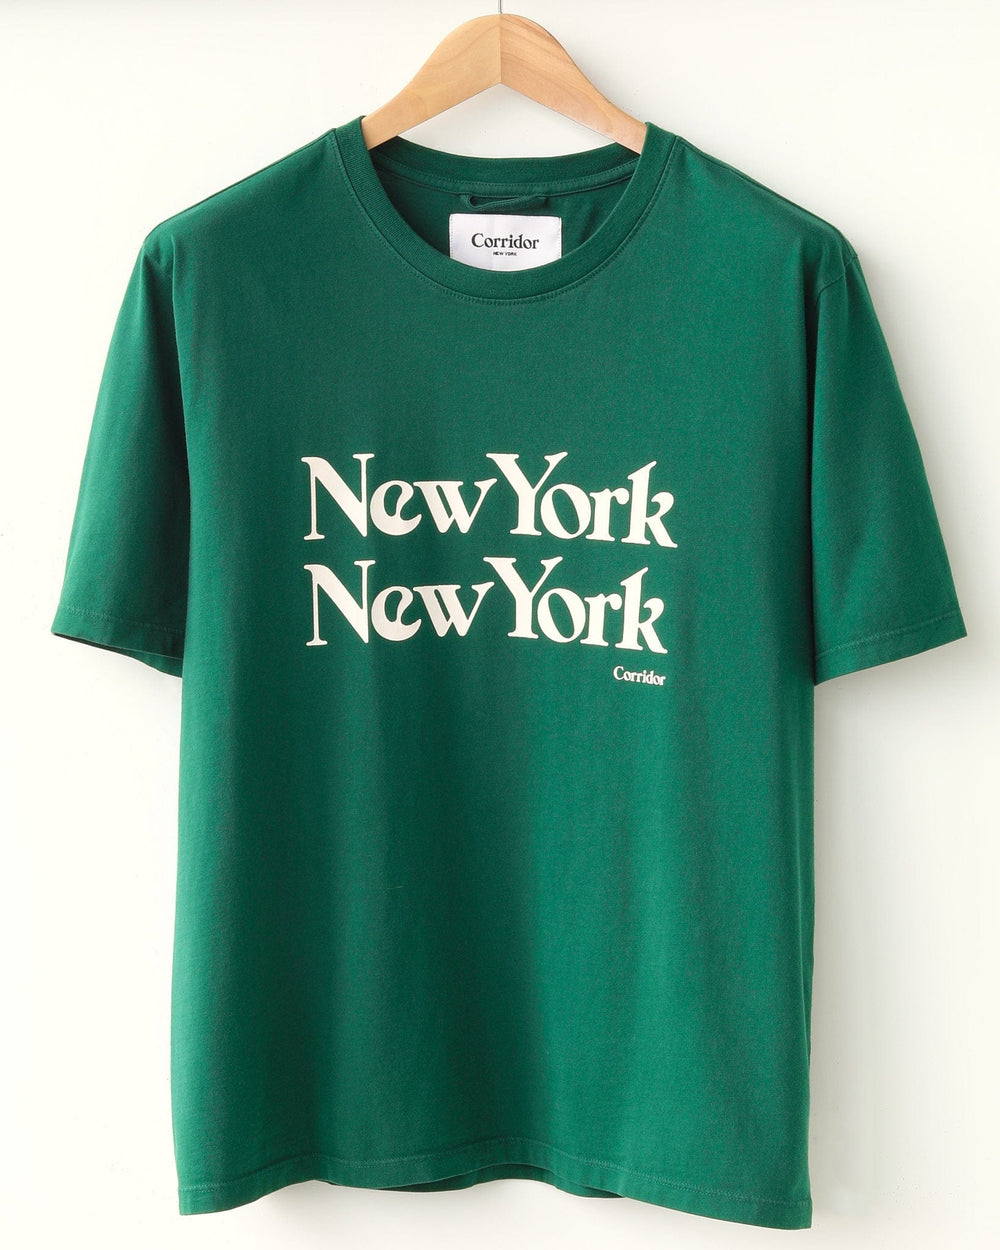 New York New York T-Shirt - Green